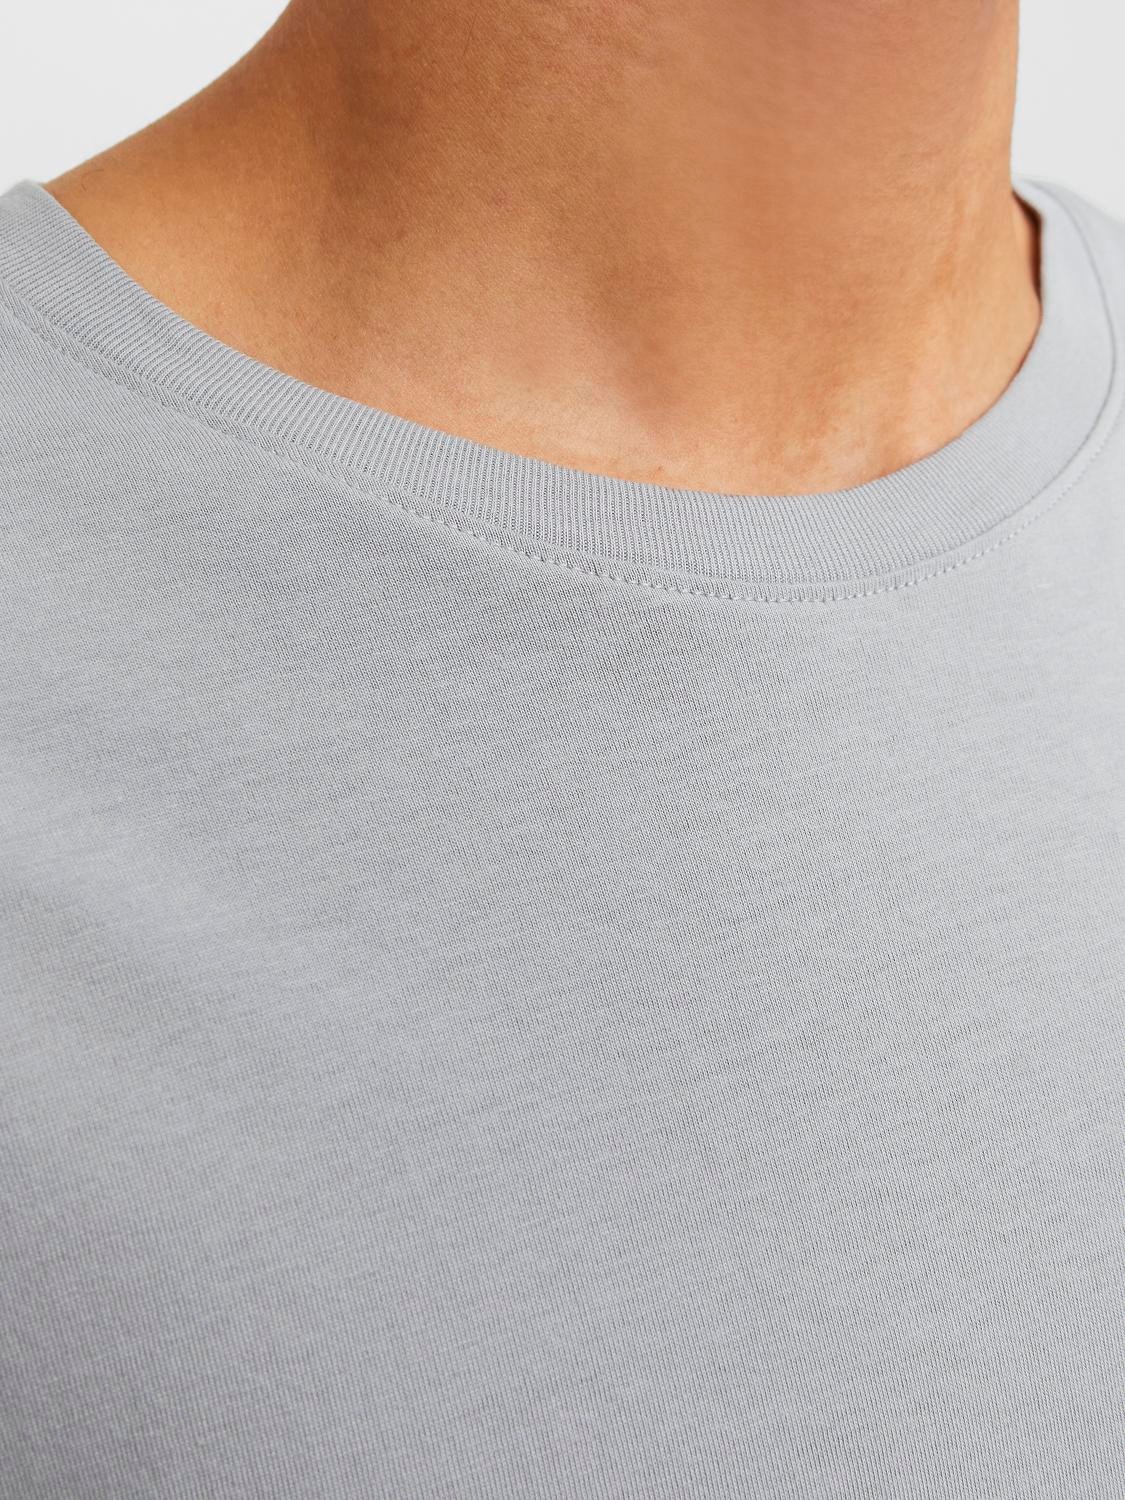 Jack & Jones Gładki Okrągły dekolt T-shirt -Ultimate Grey - 12156101